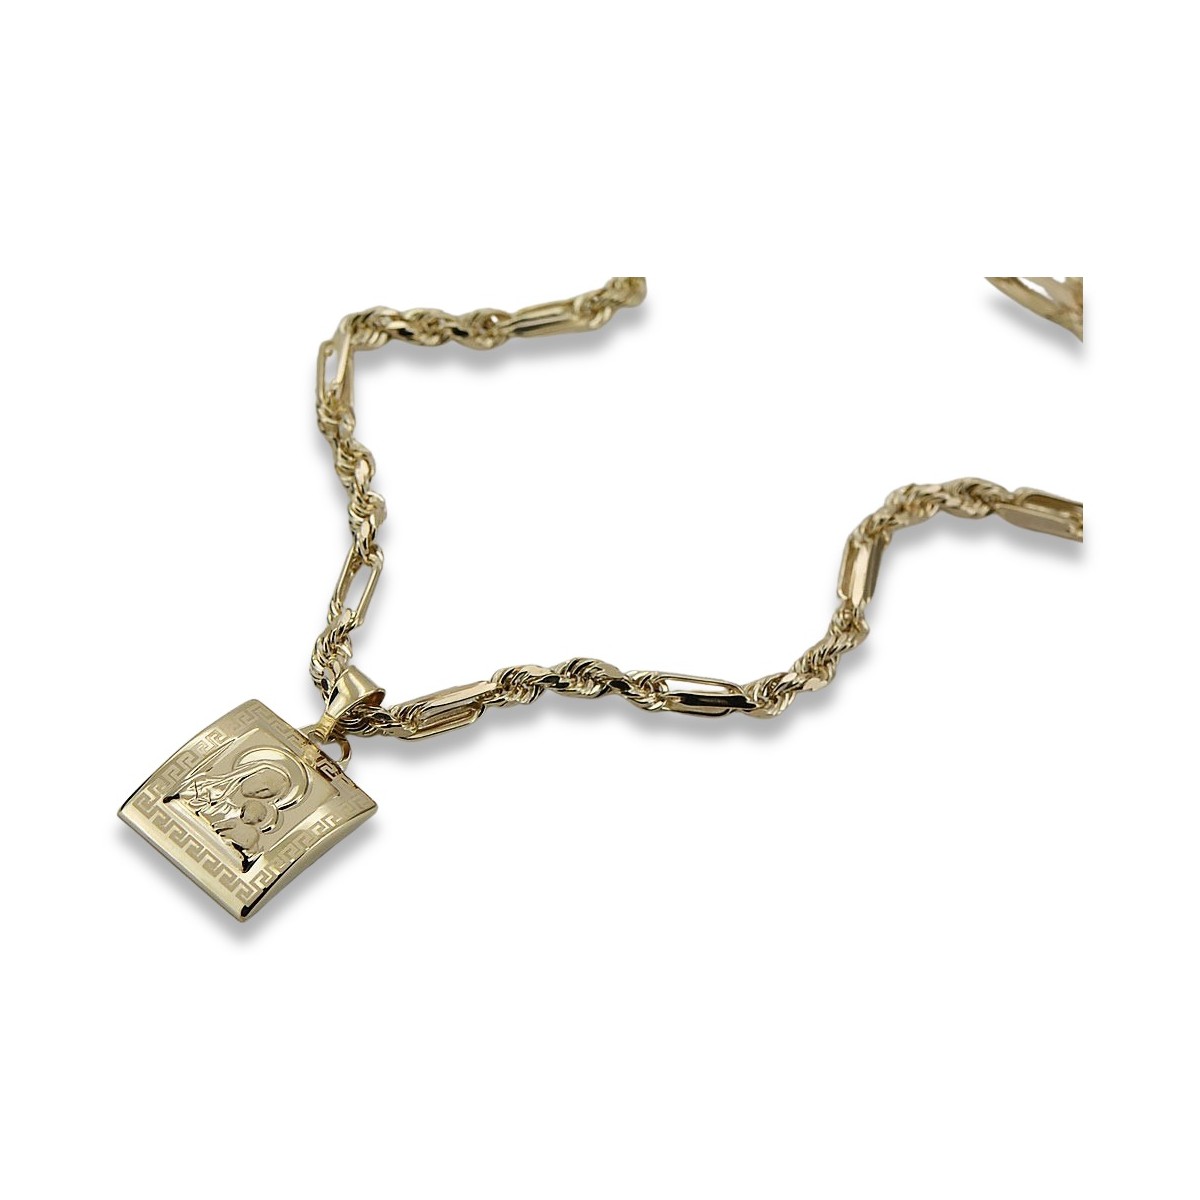 копие на златен медальон Bozia 14k 585 с верига Corda Figaro pm004yM&cc004y45